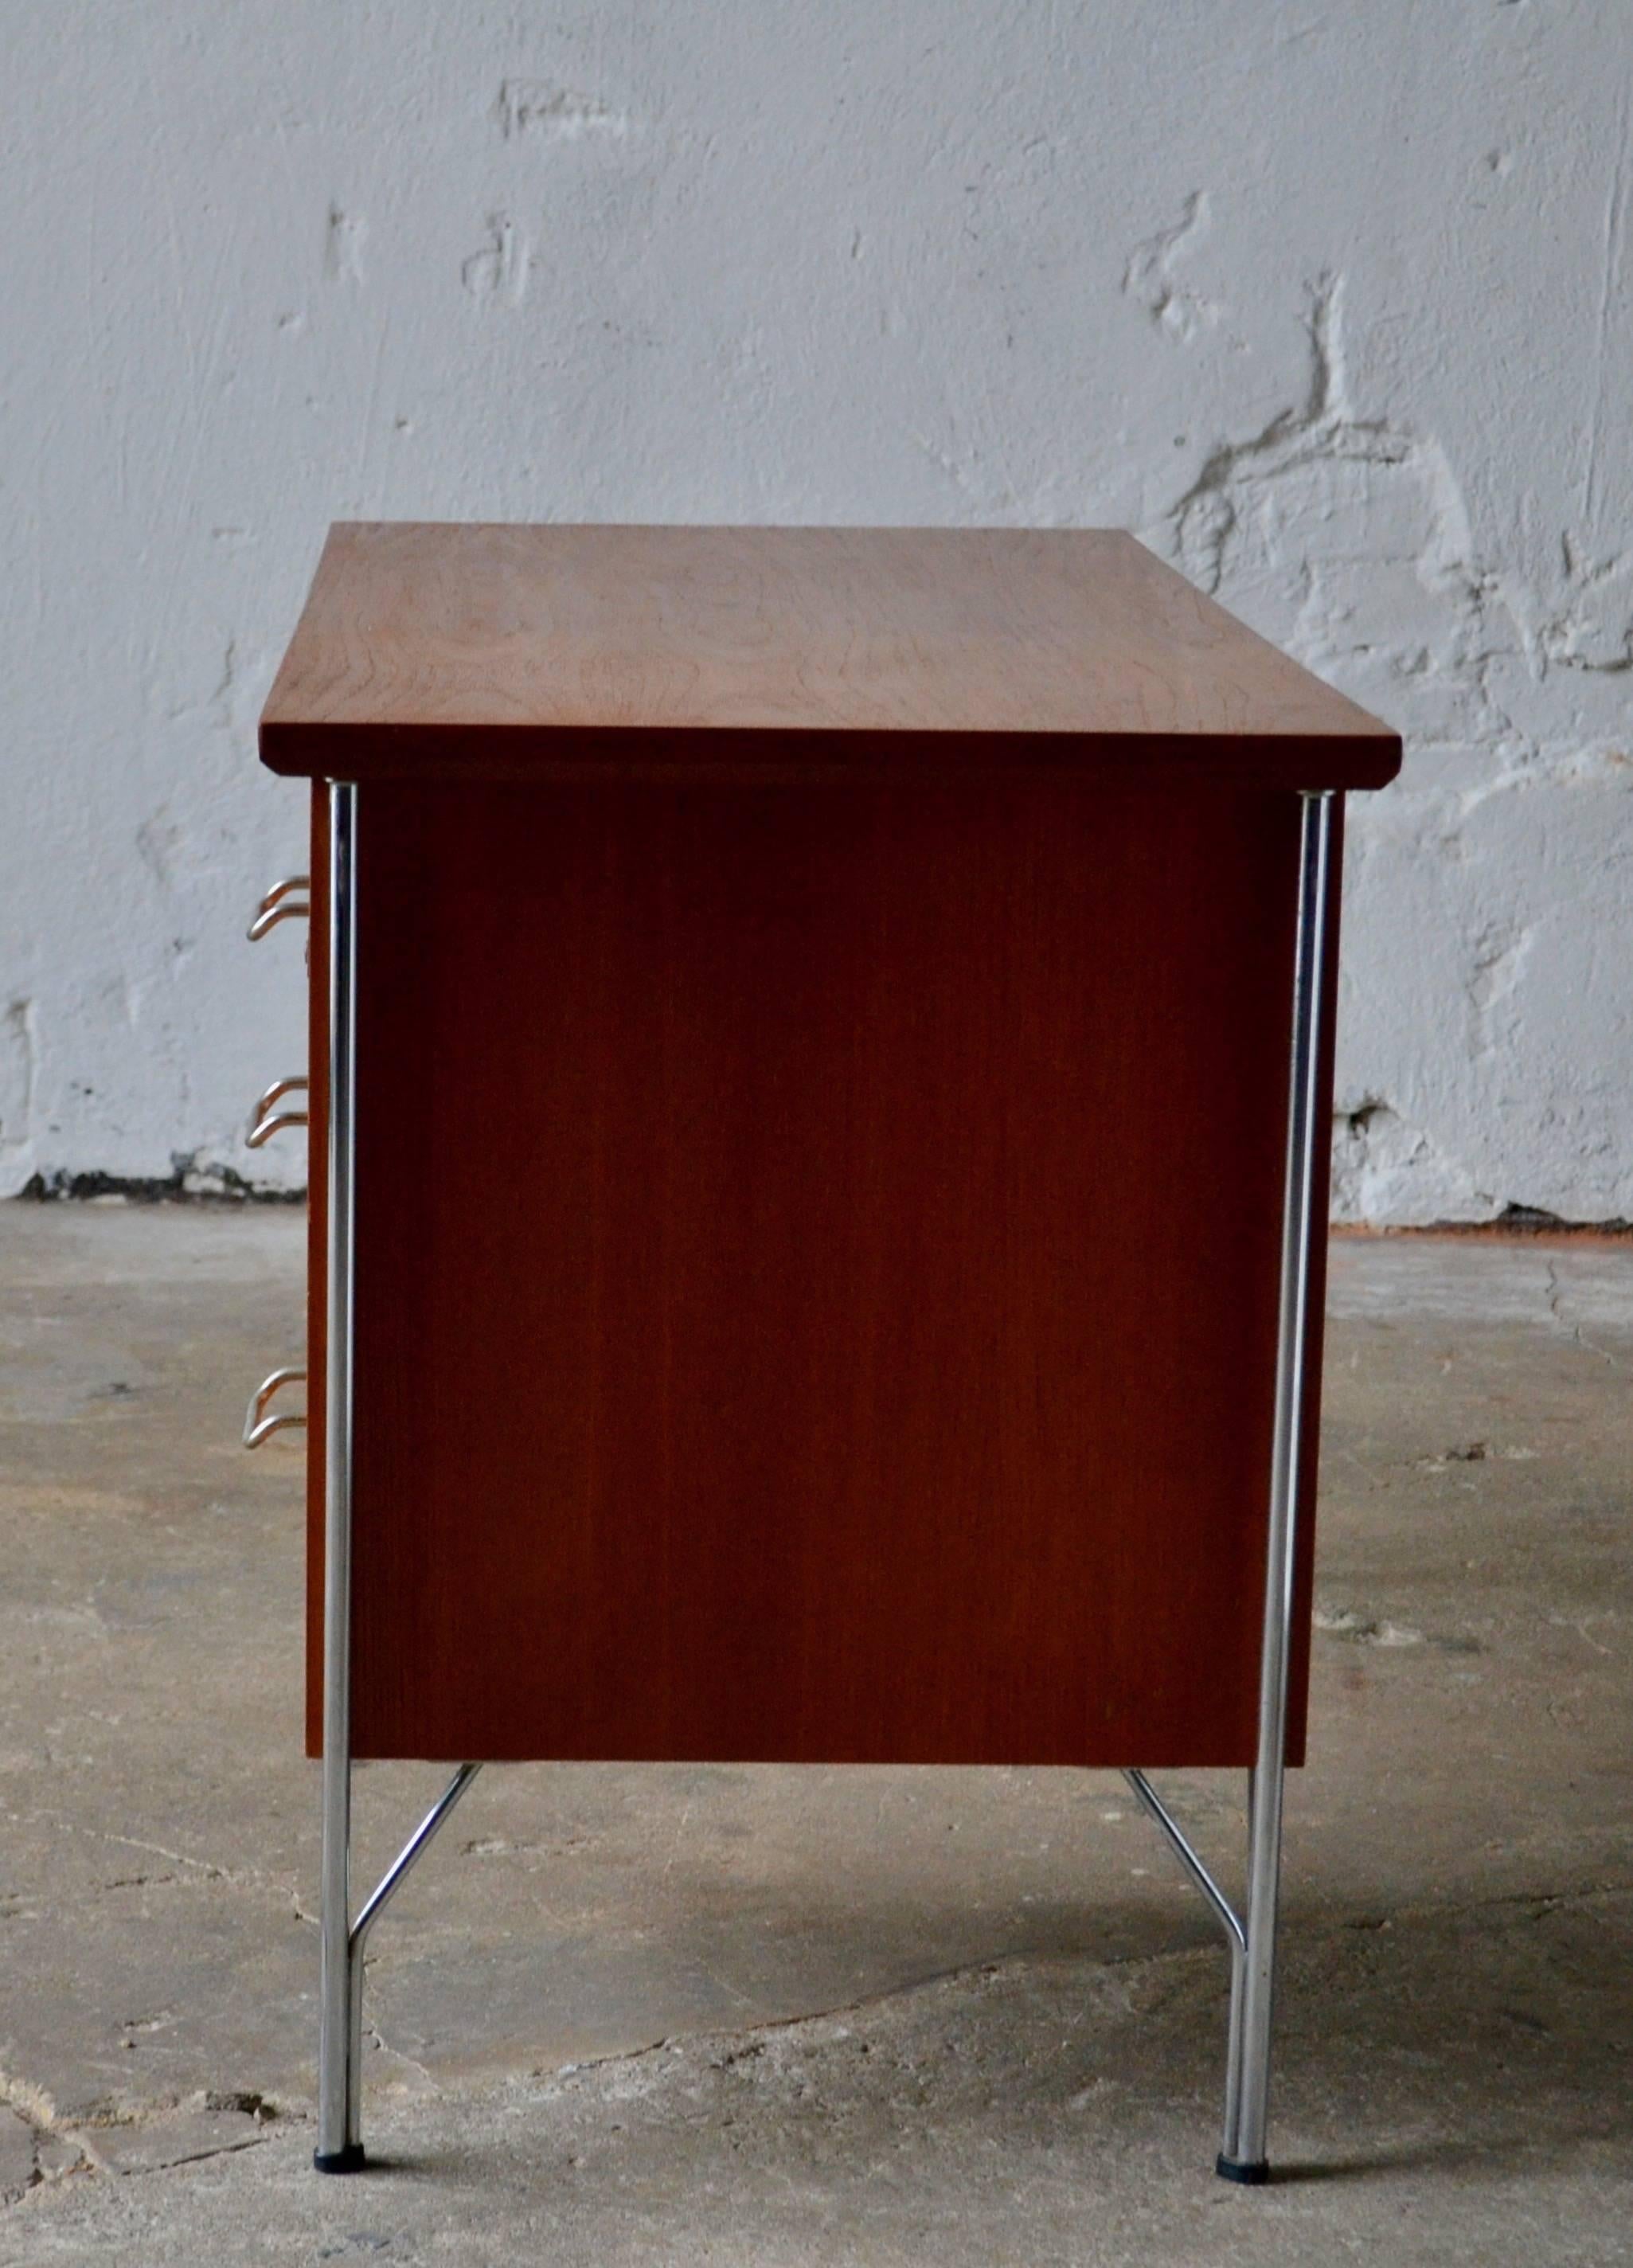 Danish teak desk by Heinrich Roepstorff
1950s
Single pedestal teak desk with chromed steel legs and handles.